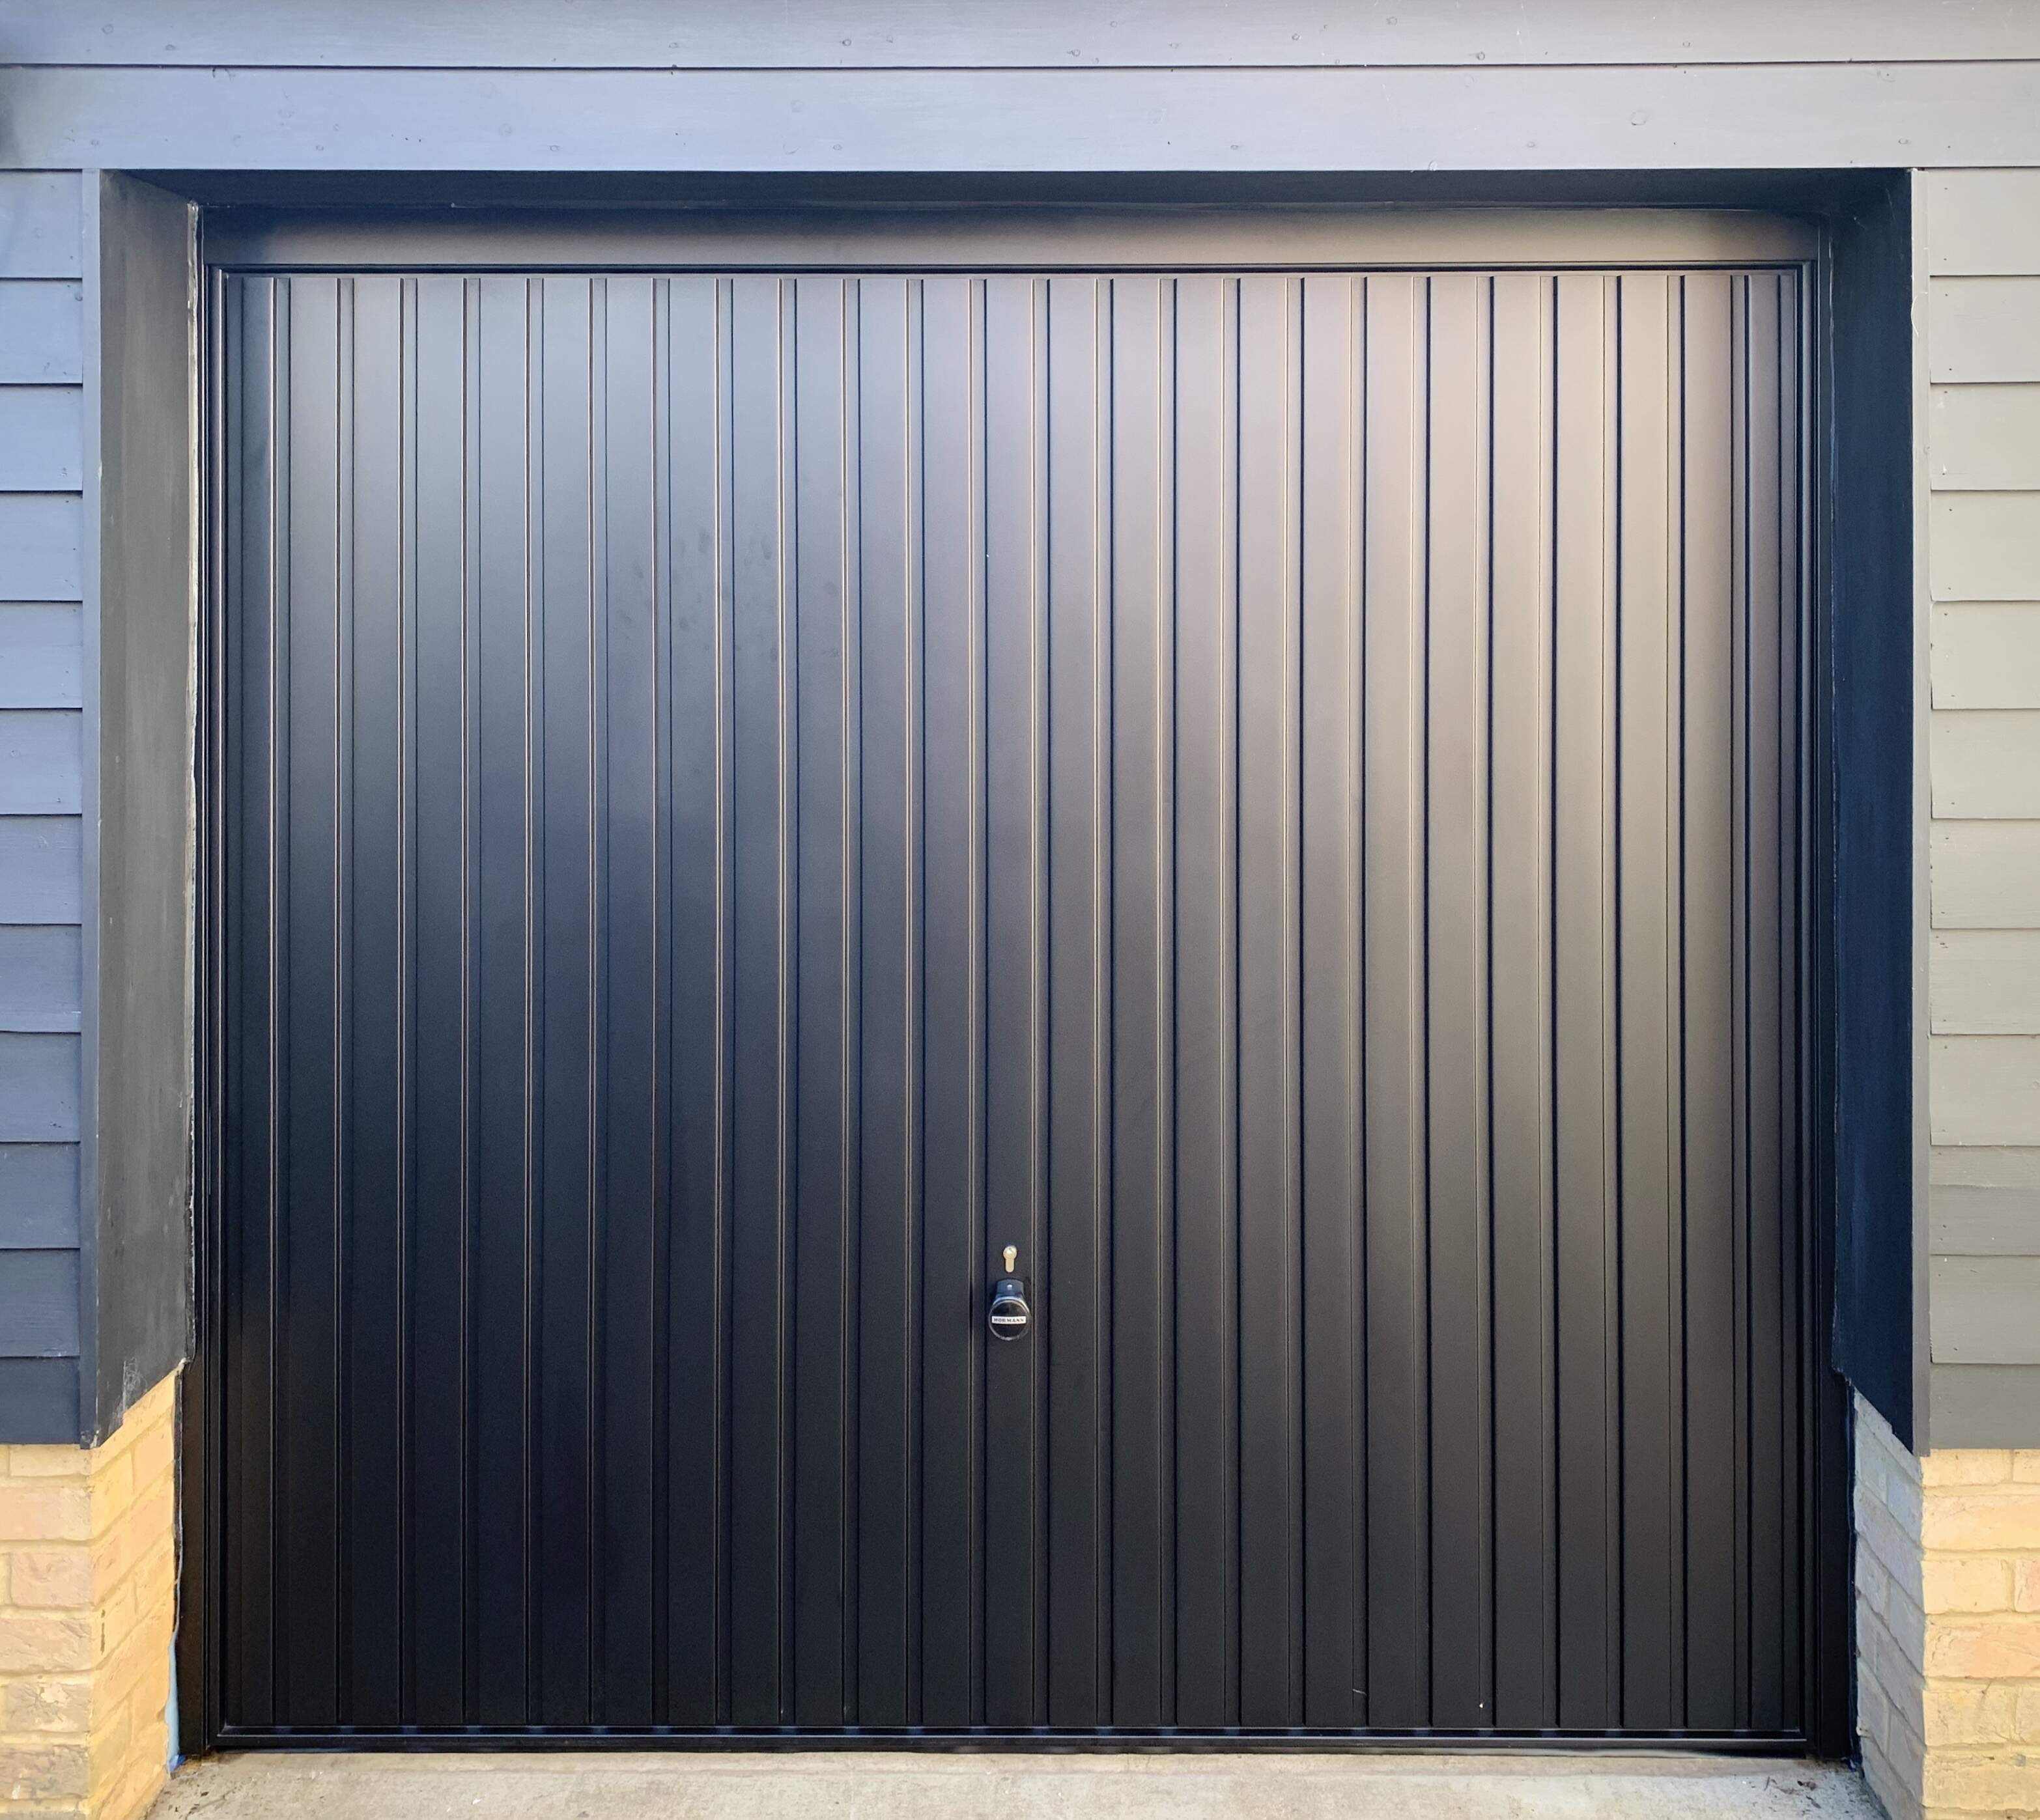 Single Steel (Black) Vertical Canopy Garage Door with Black Frame.